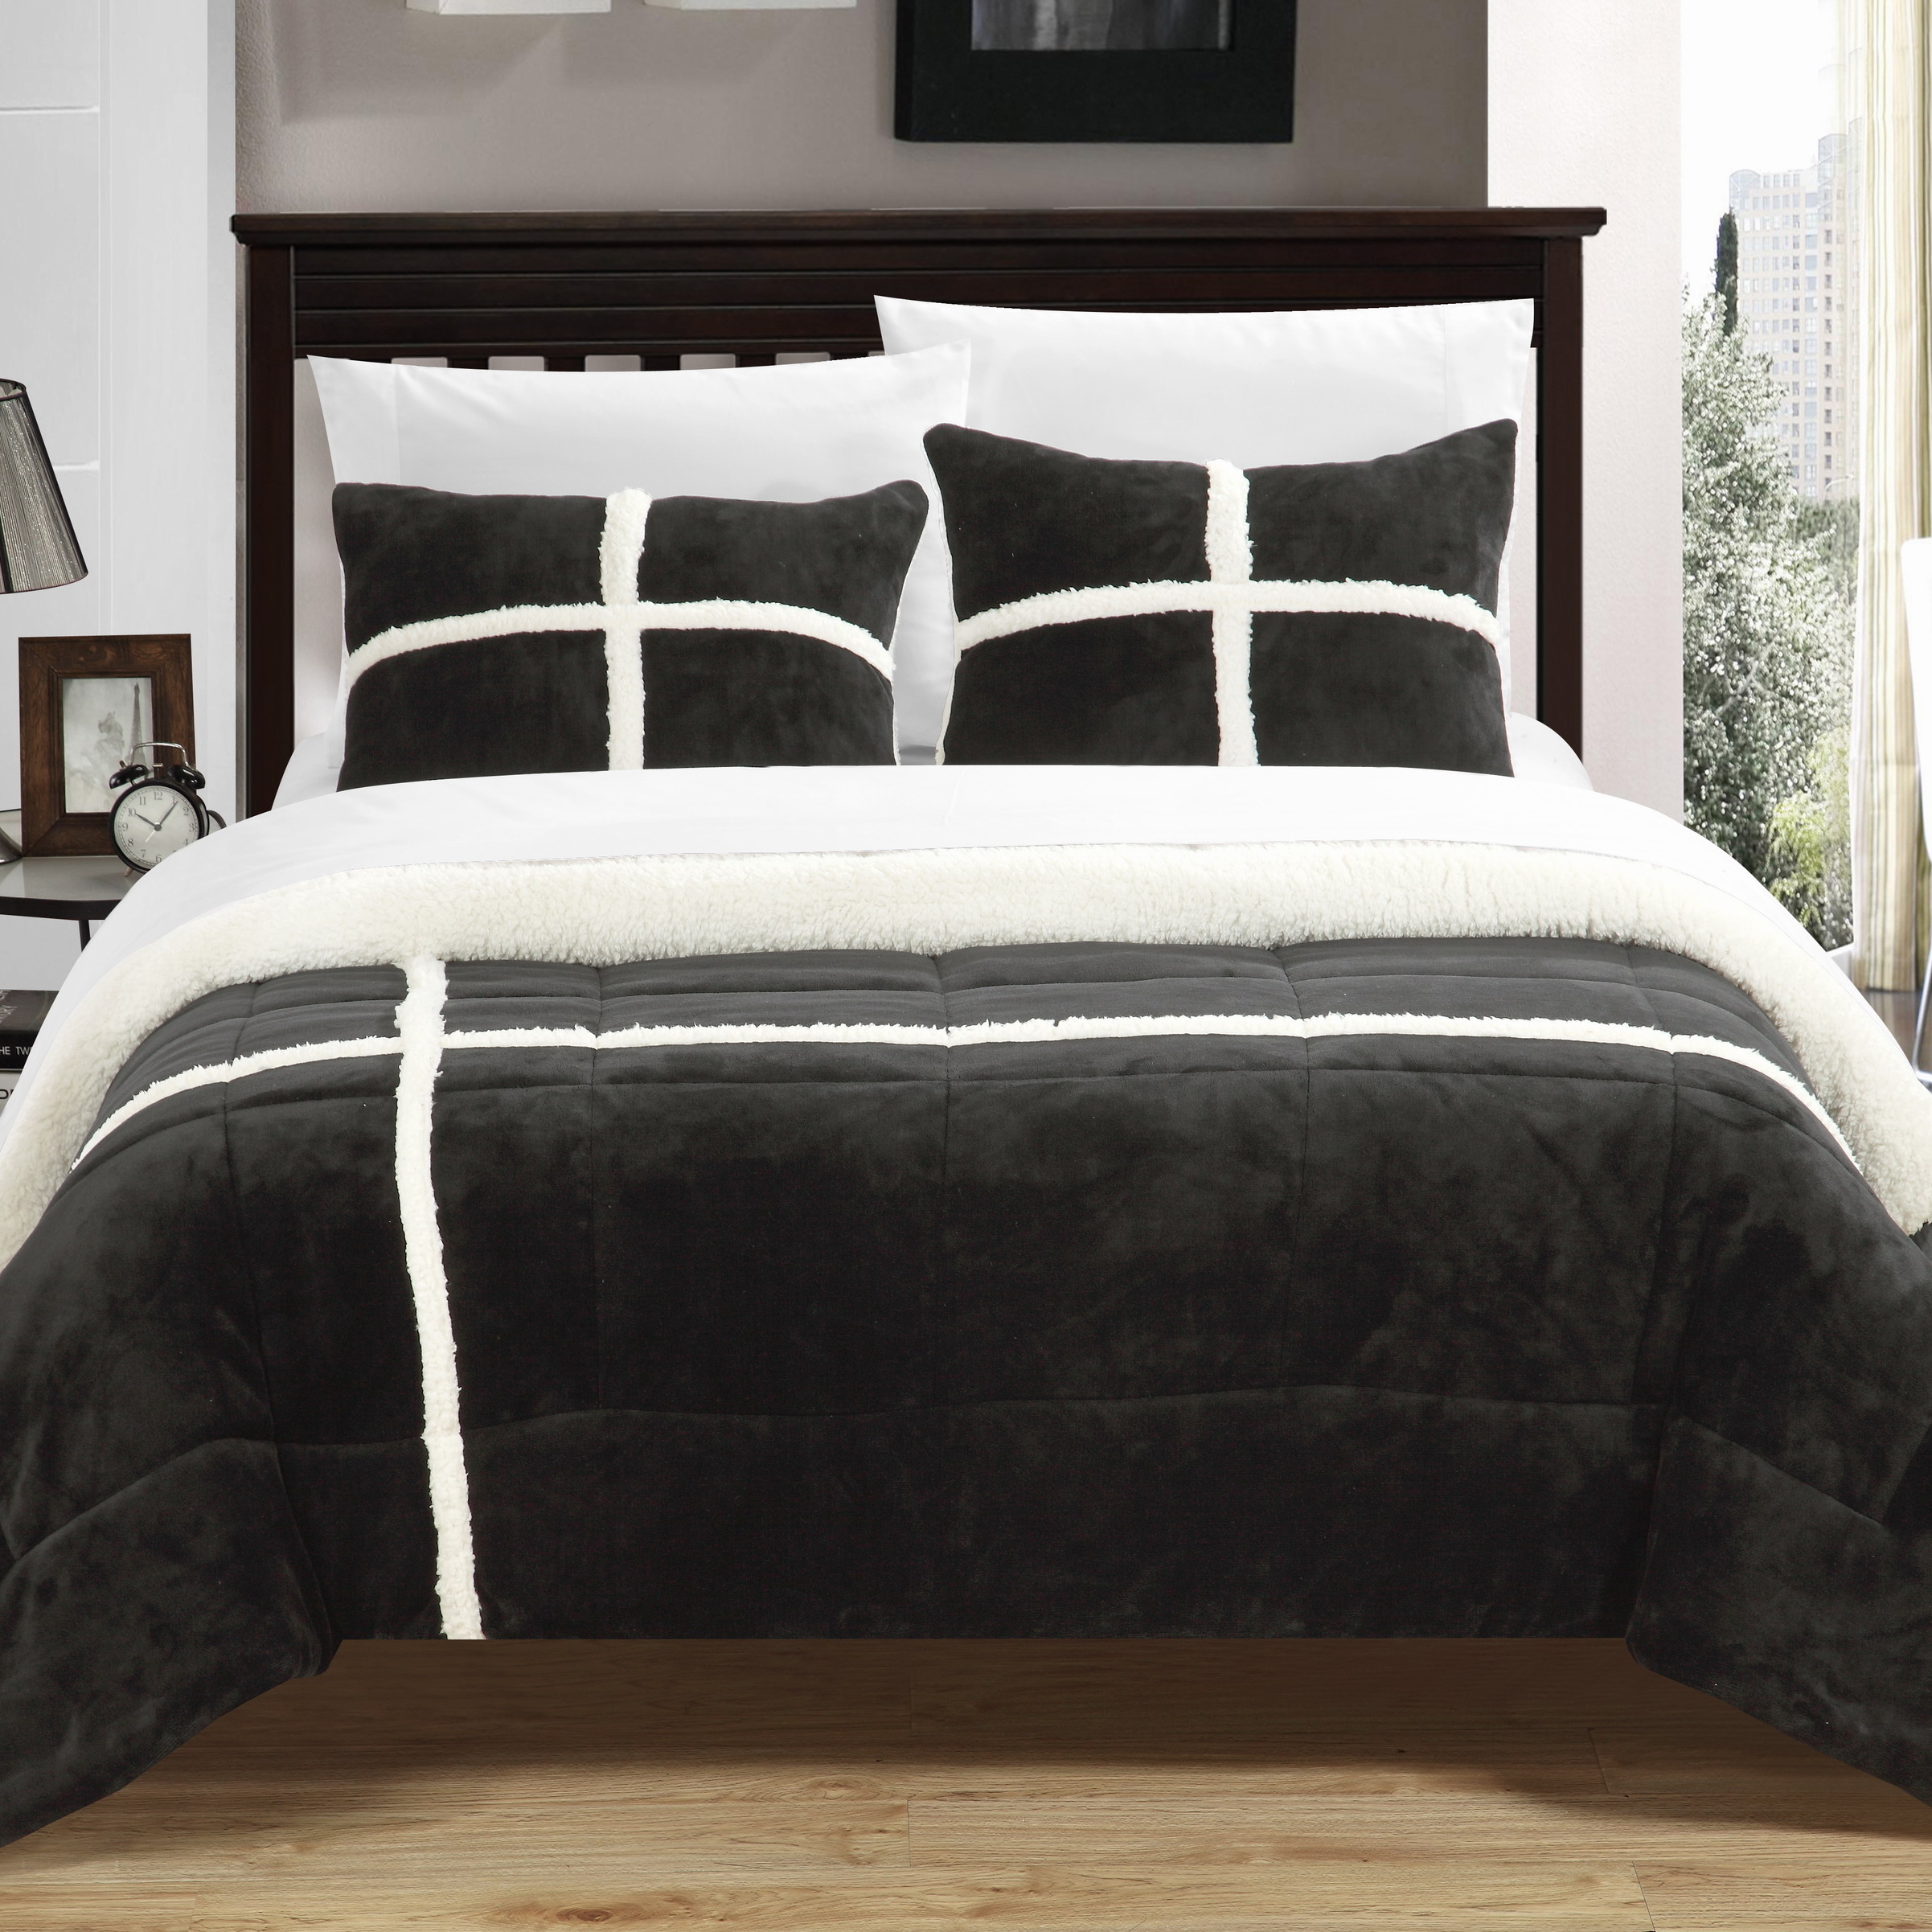 Chloe 3 Or 2 Piece Comforter Set Ultra Plush Micro Mink Sherpa Lined Bedding â Decorative Pillow Shams Included - Black, Twin - 2 Piece